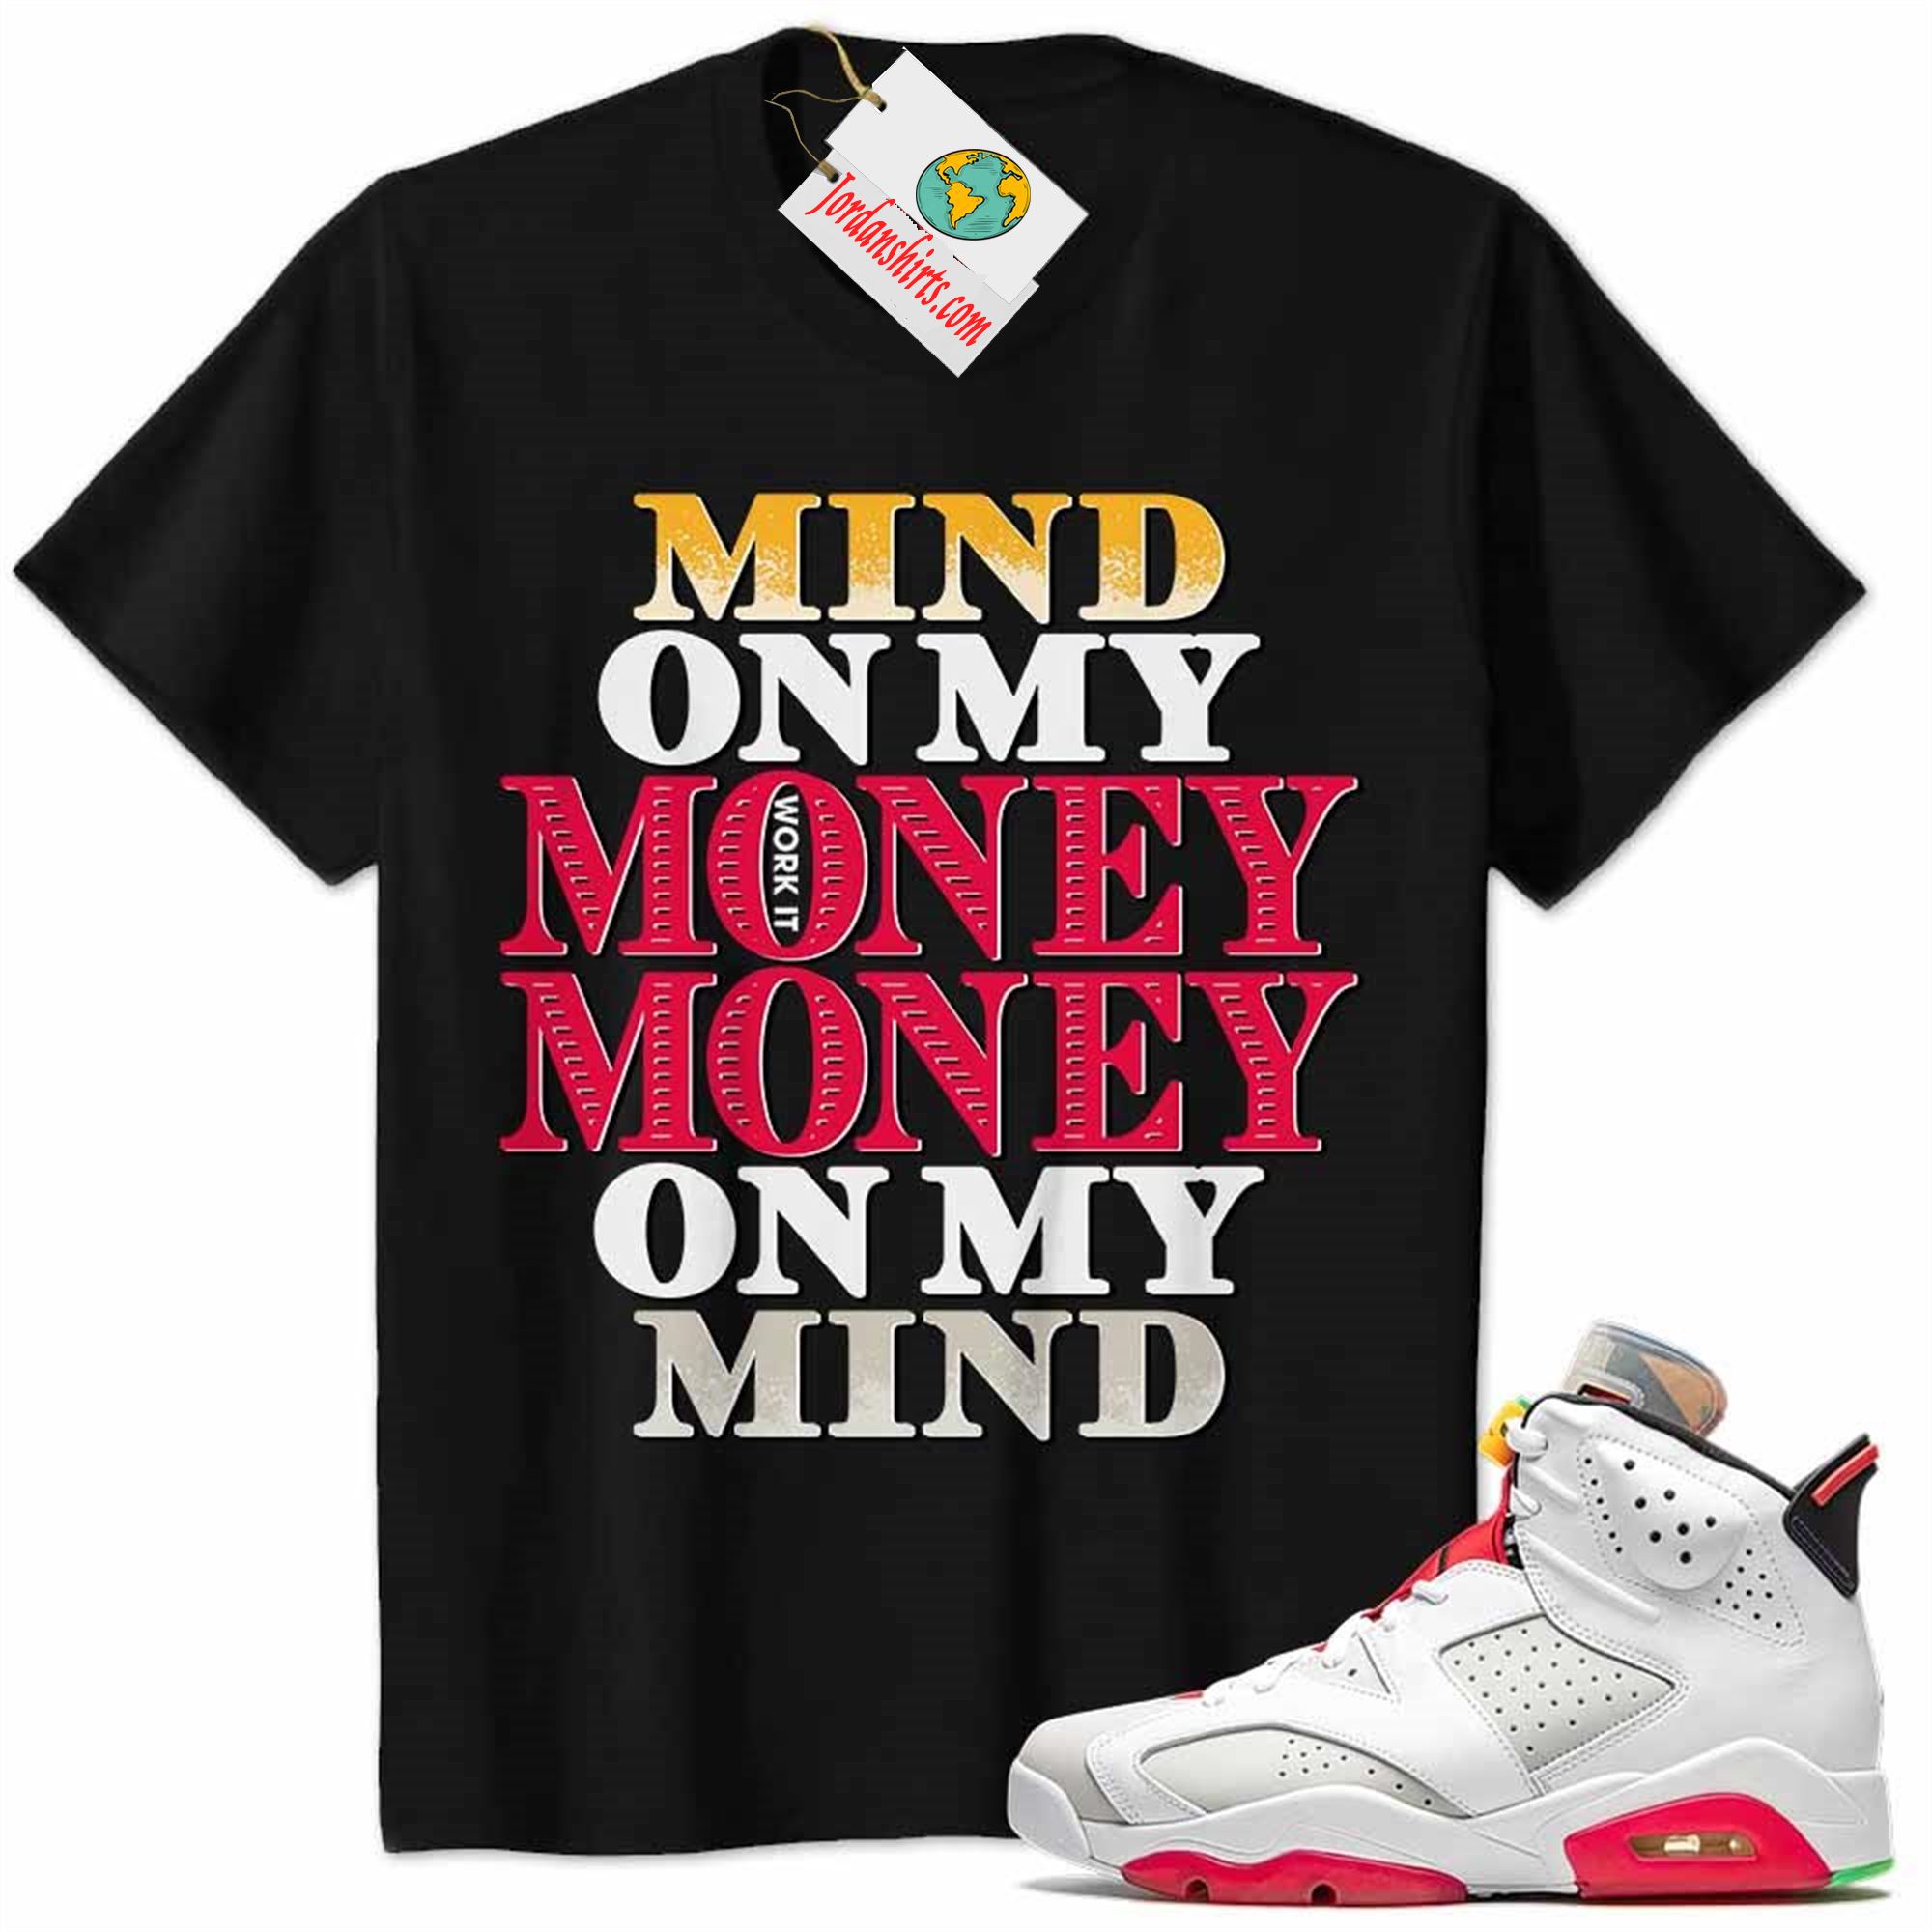 Jordan 6 Shirt, Jordan 6 Hare Shirt Mind On My Money Money On My Mind Black Size Up To 5xl